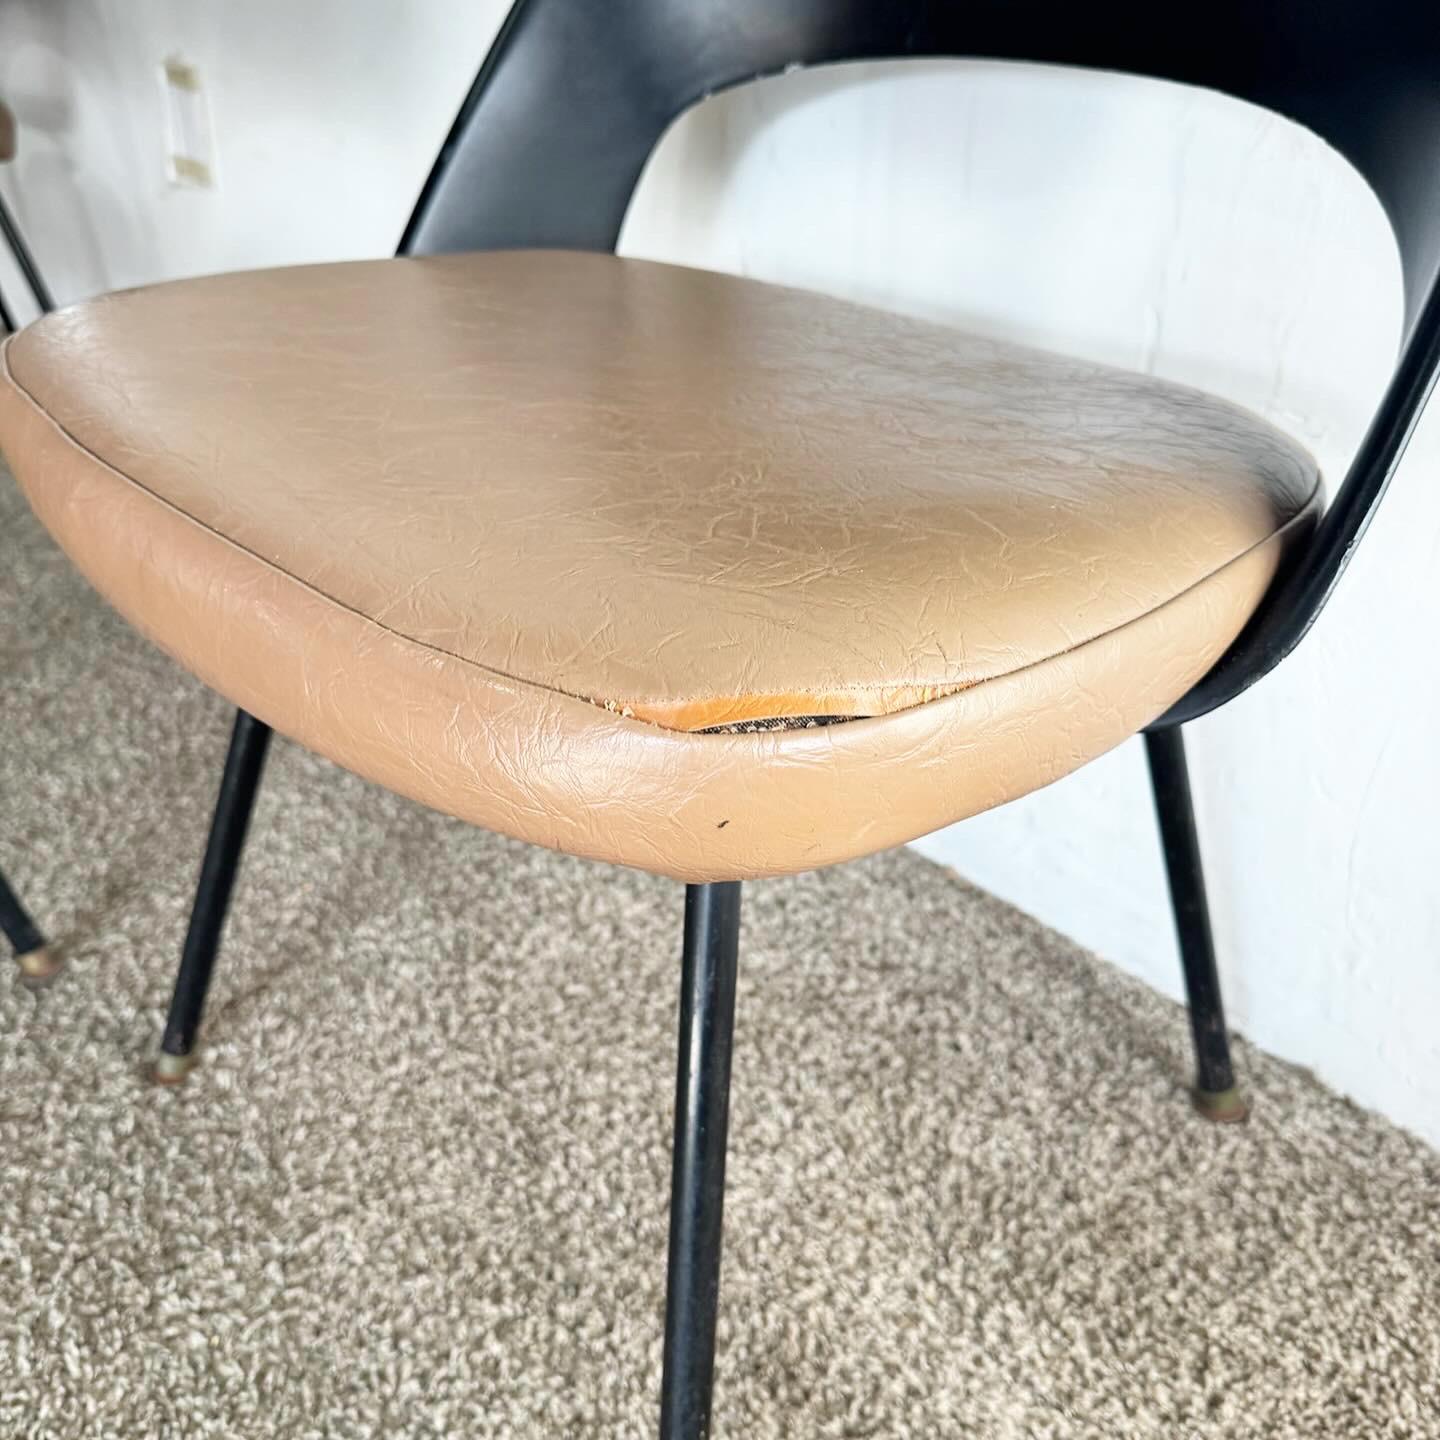 20th Century Mid Century Modern Eero Saarinen Model 42 Style Dining Chairs - Set of 4 For Sale